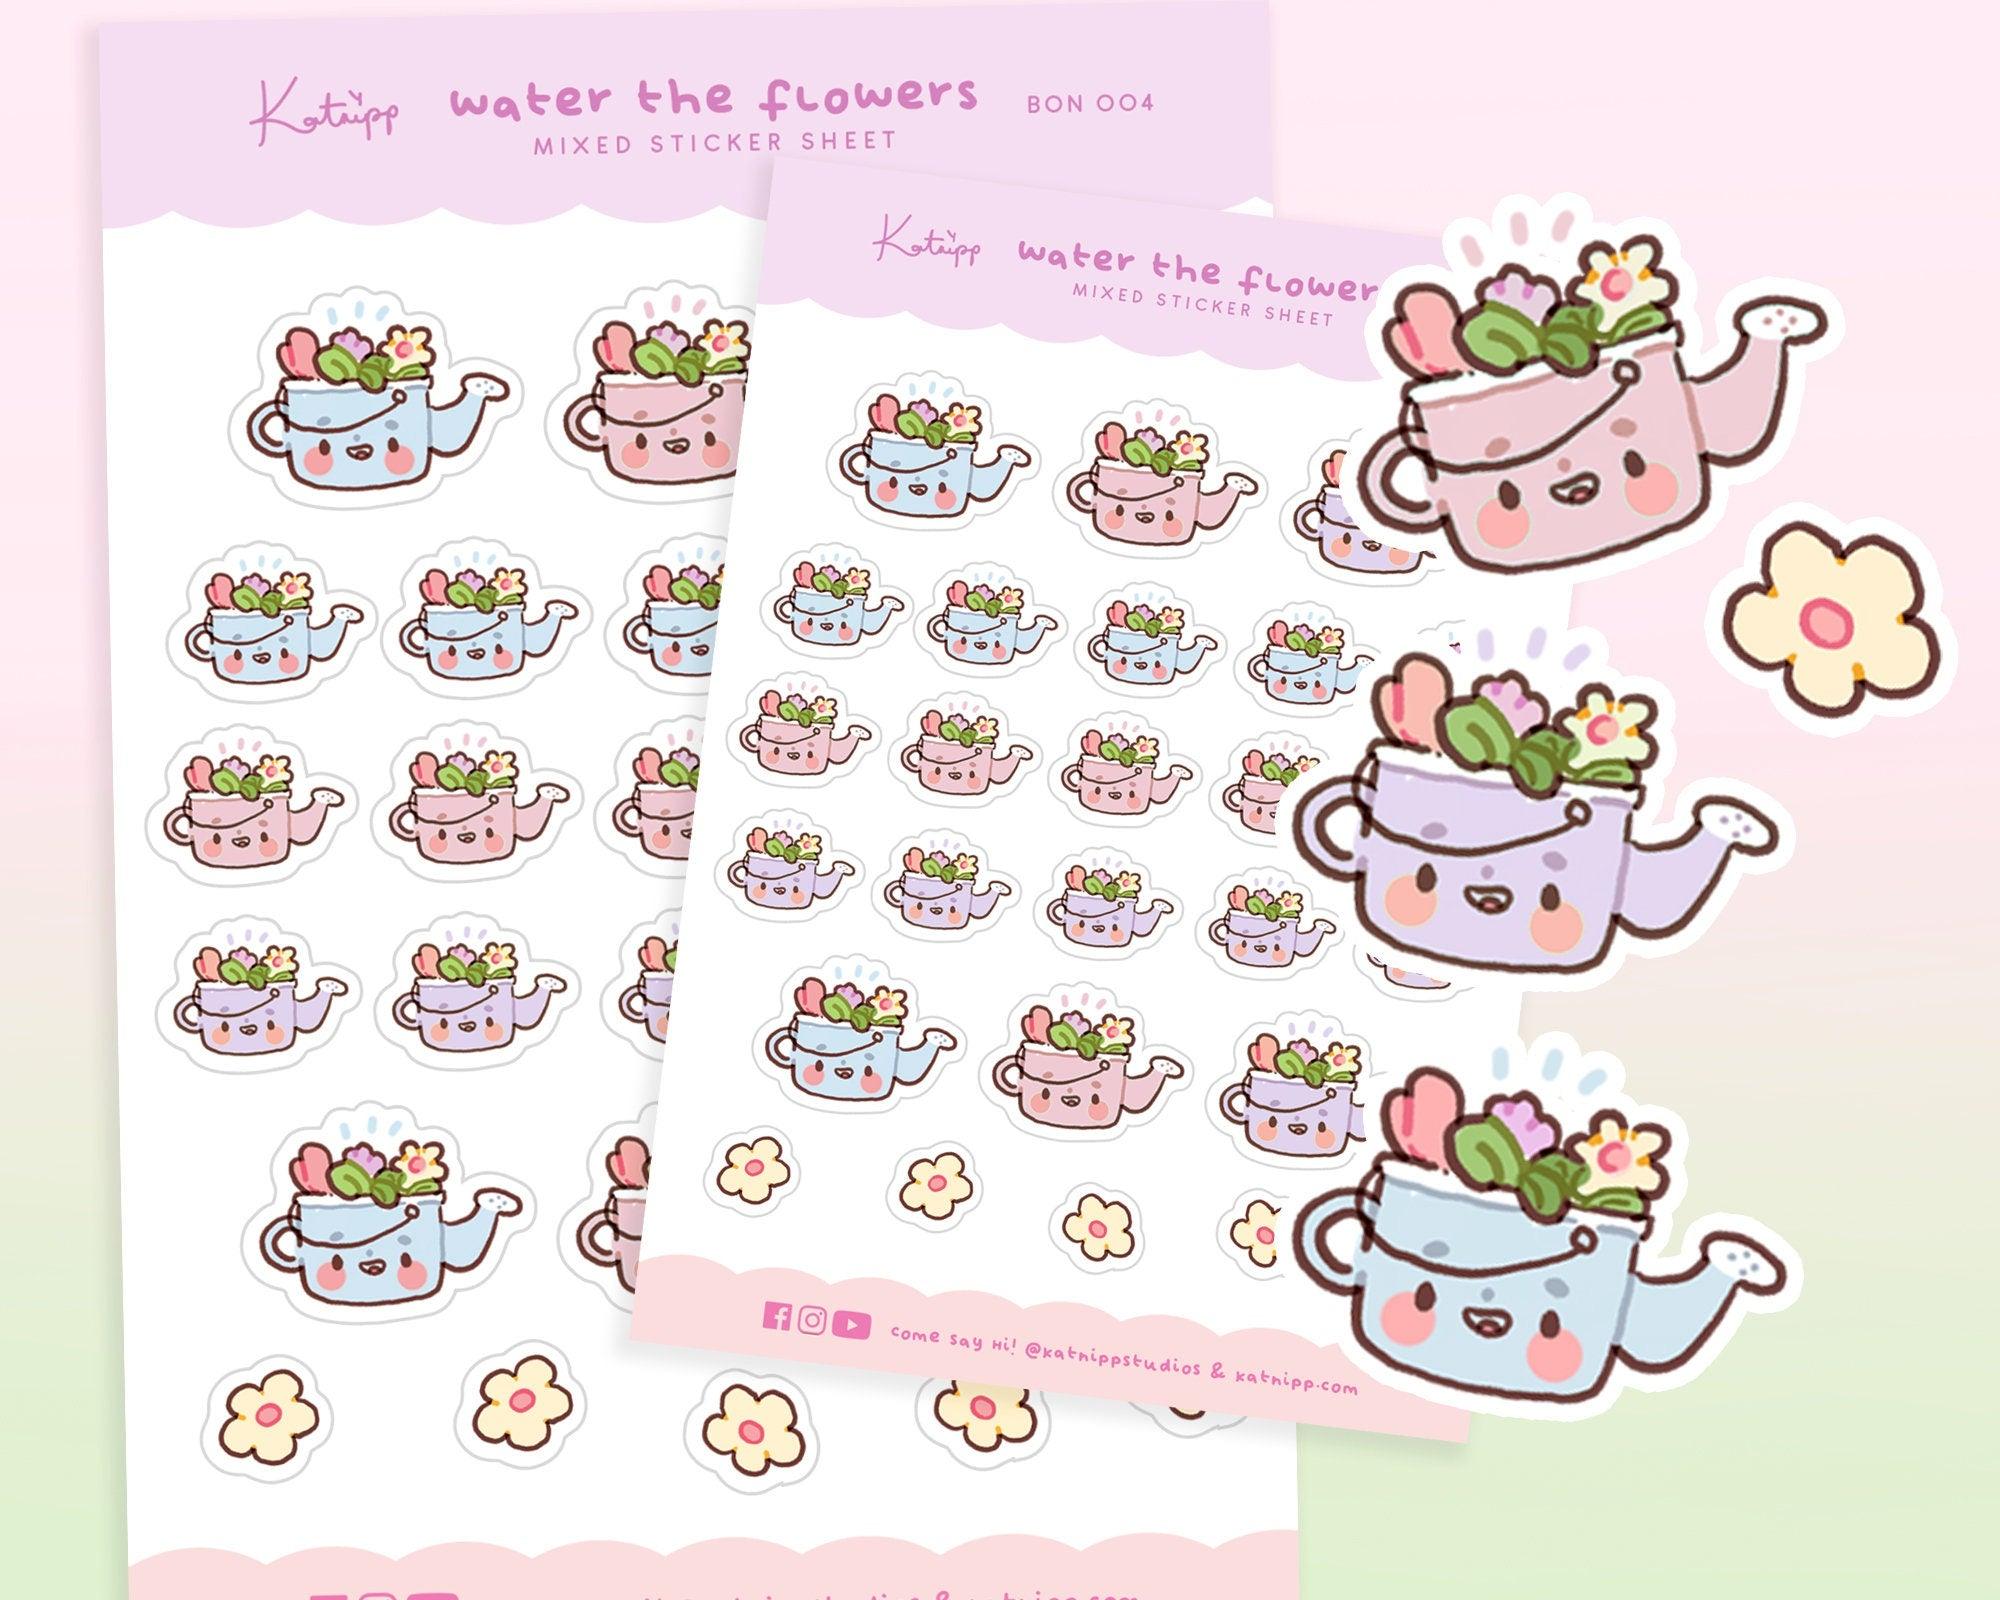 Bonbun's Spring Gardening Pastel Sticker Sheet - Cute bunny gardening stickers in pastel colours